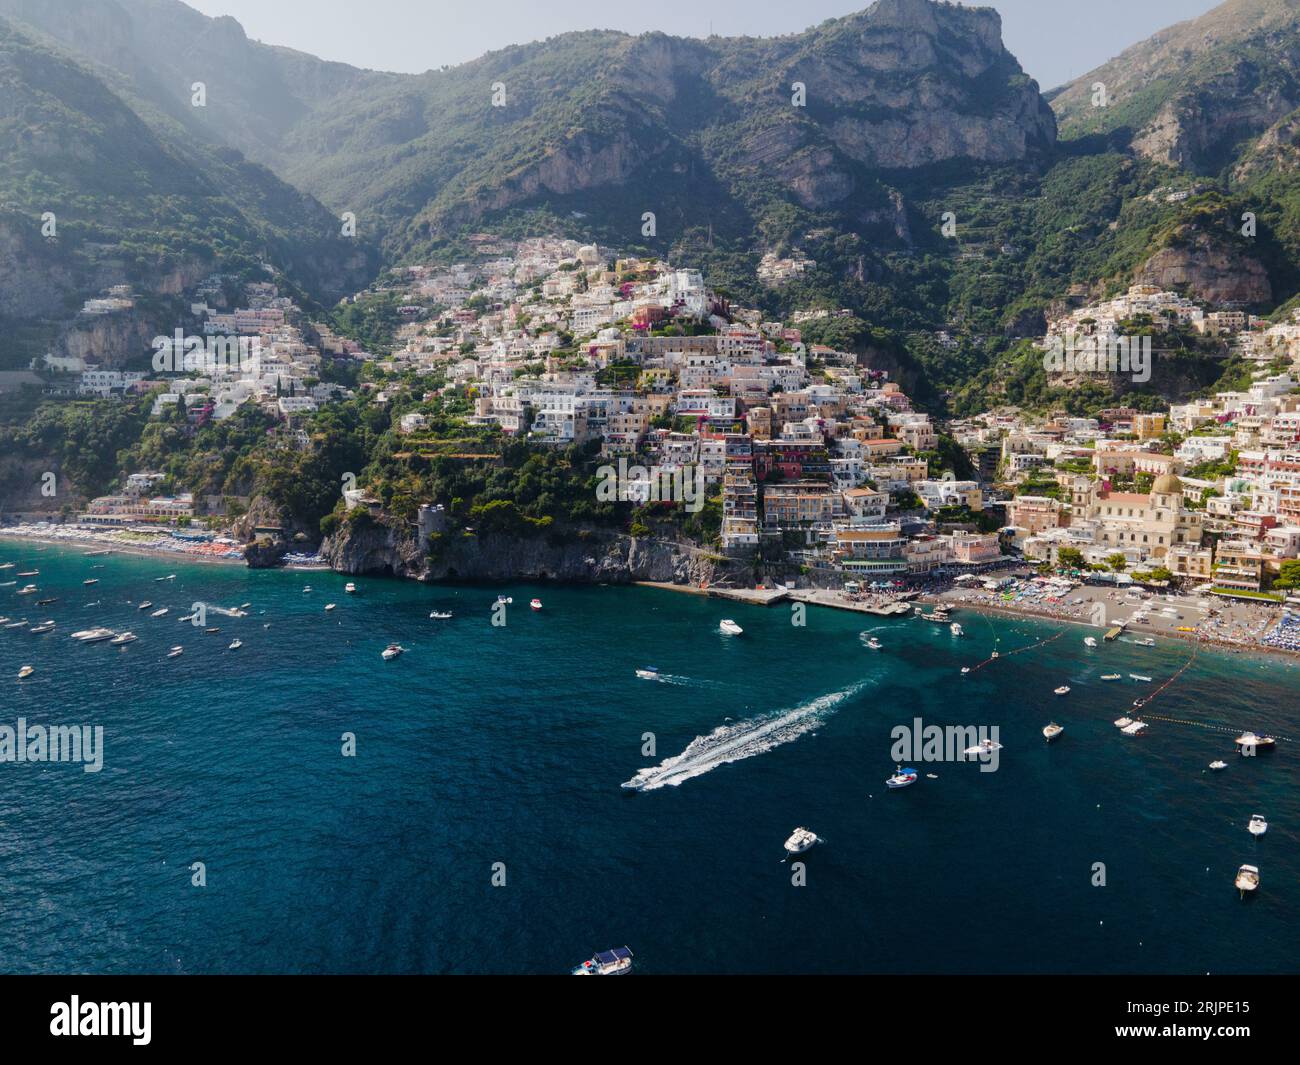 Positano on the Amalfi Coast, Italy by Drone Stock Photo - Alamy